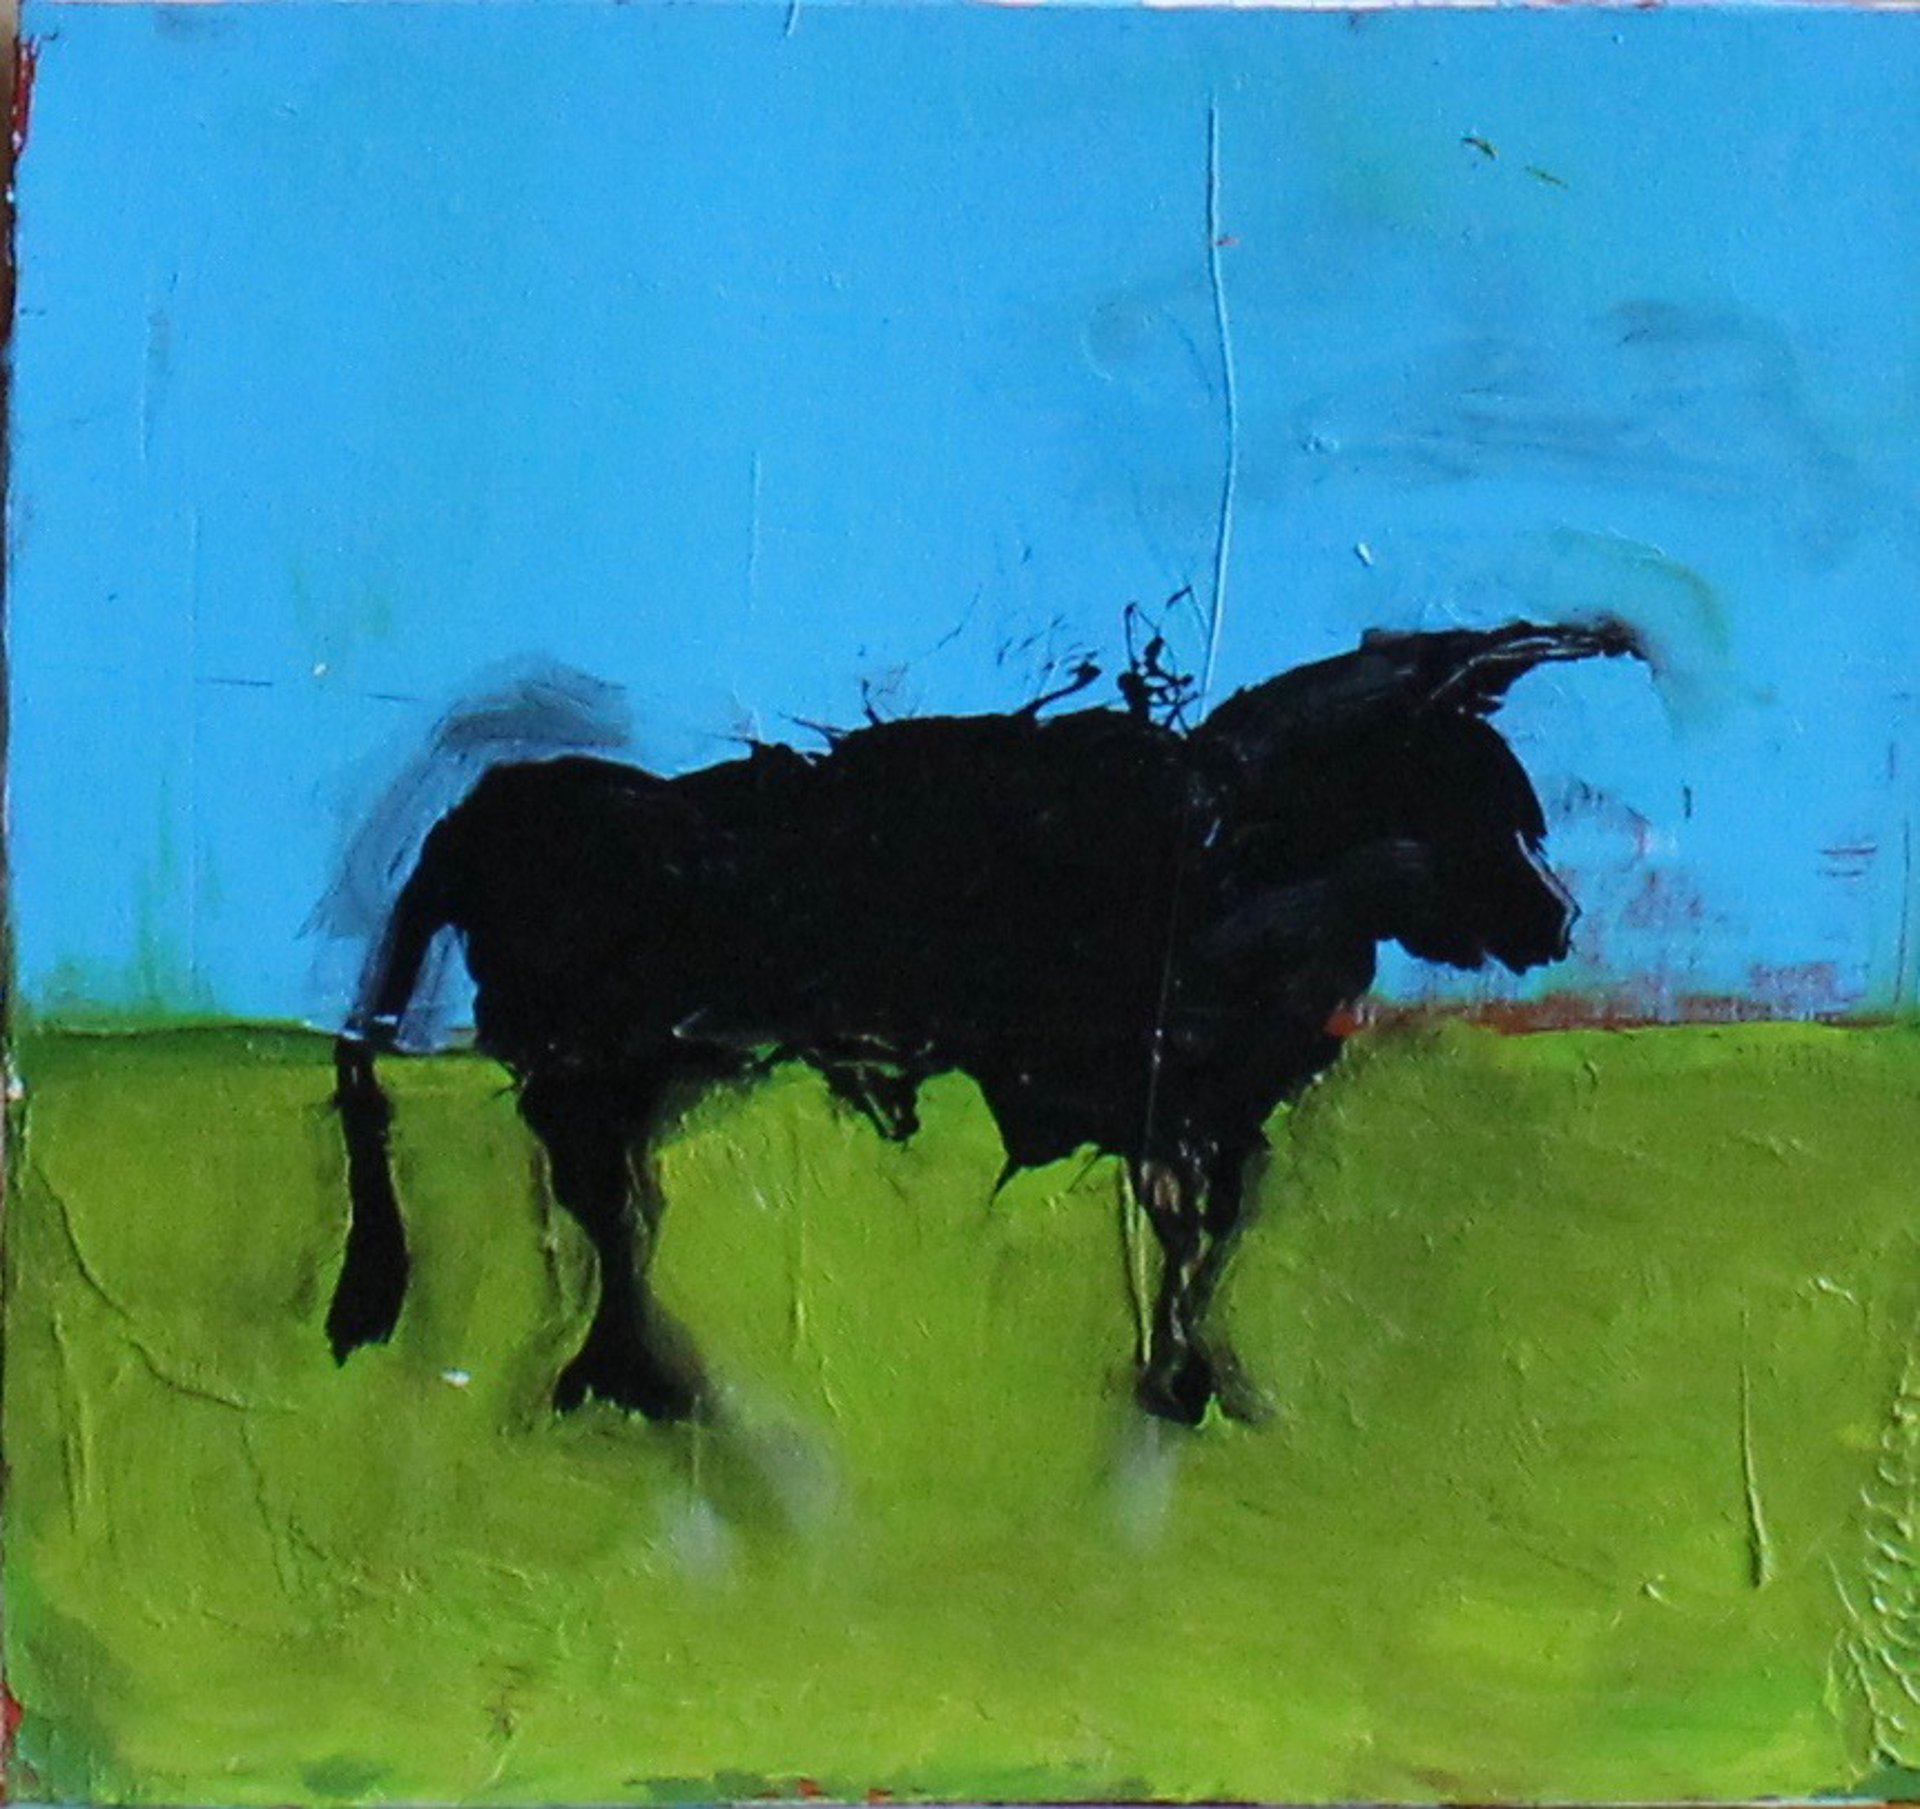 Toro in a Field by Michael Snodgrass